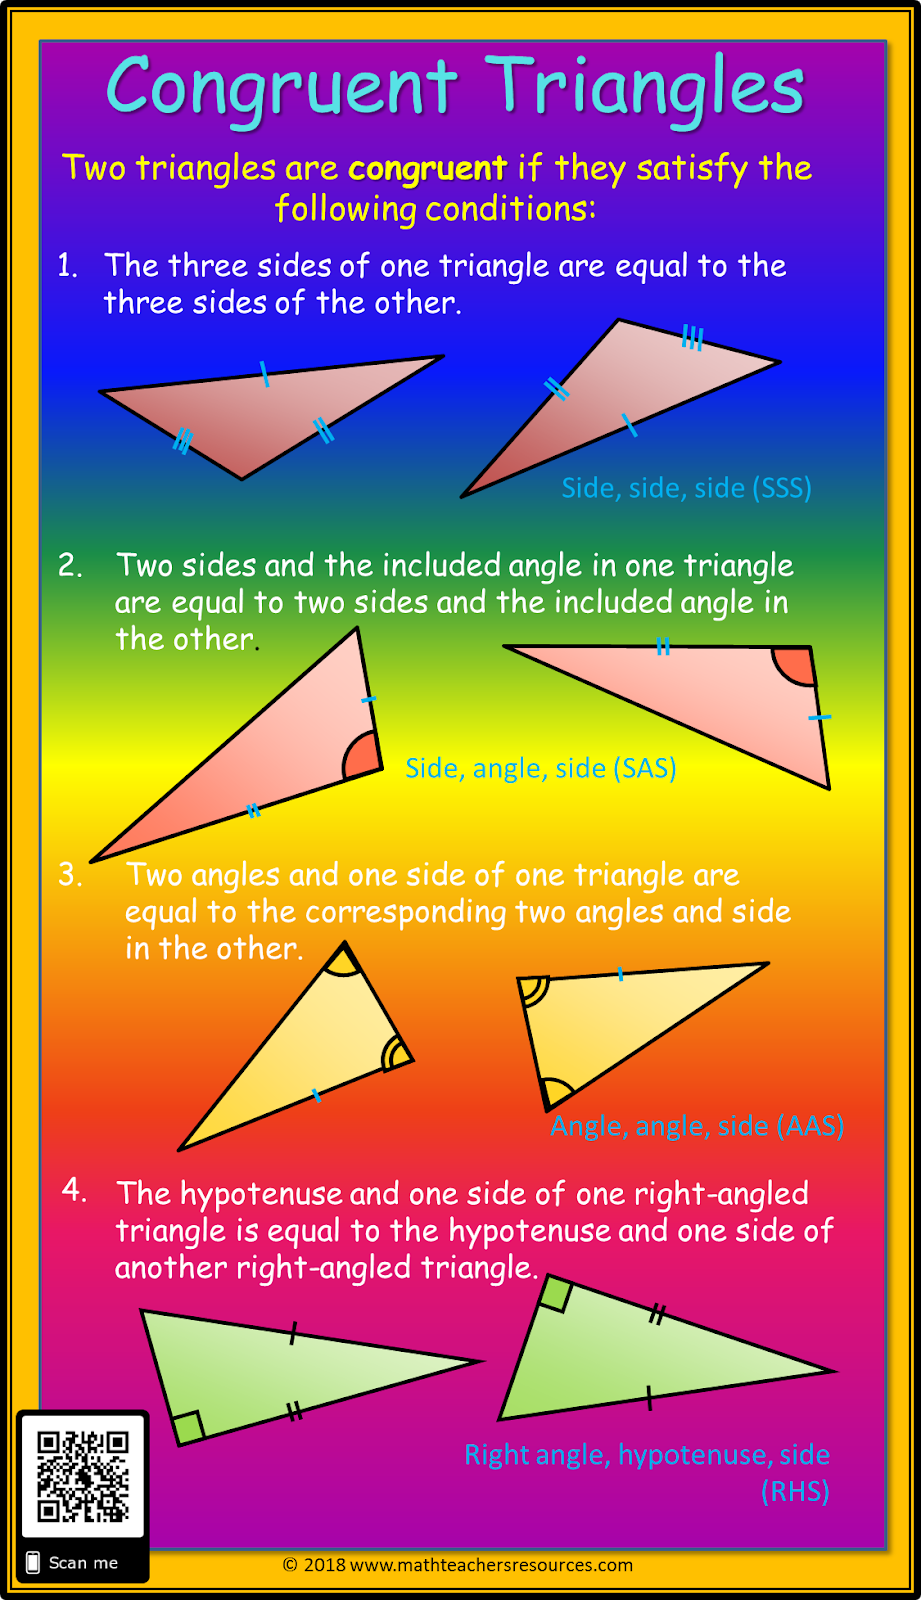 Congruent Triangle Rules TenTors Math Teacher Resources